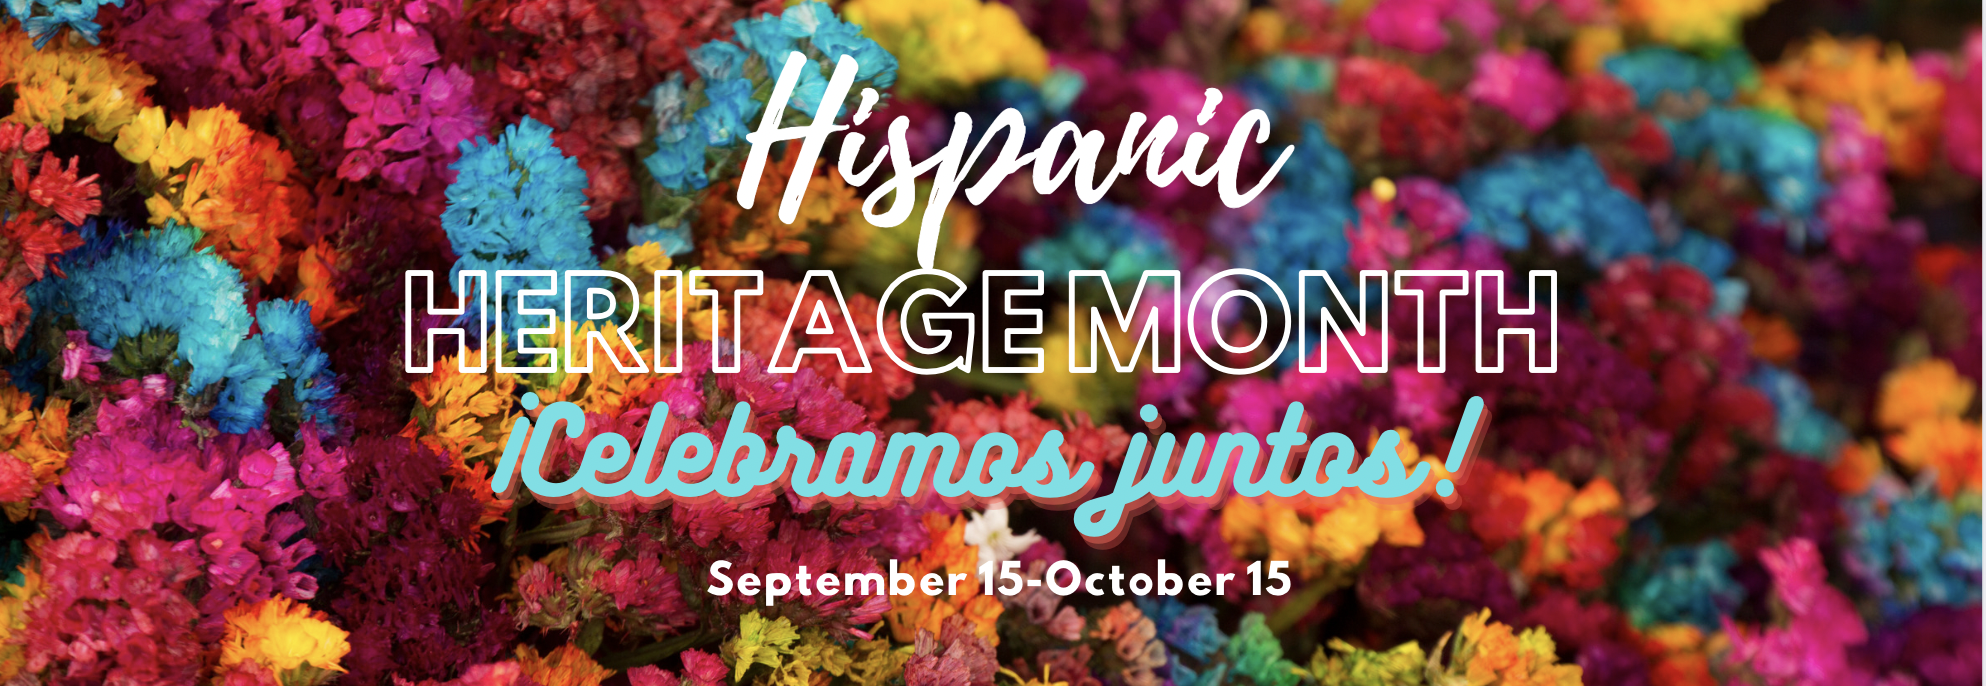 Hispanic Heritage Month - Celebramos juntos!